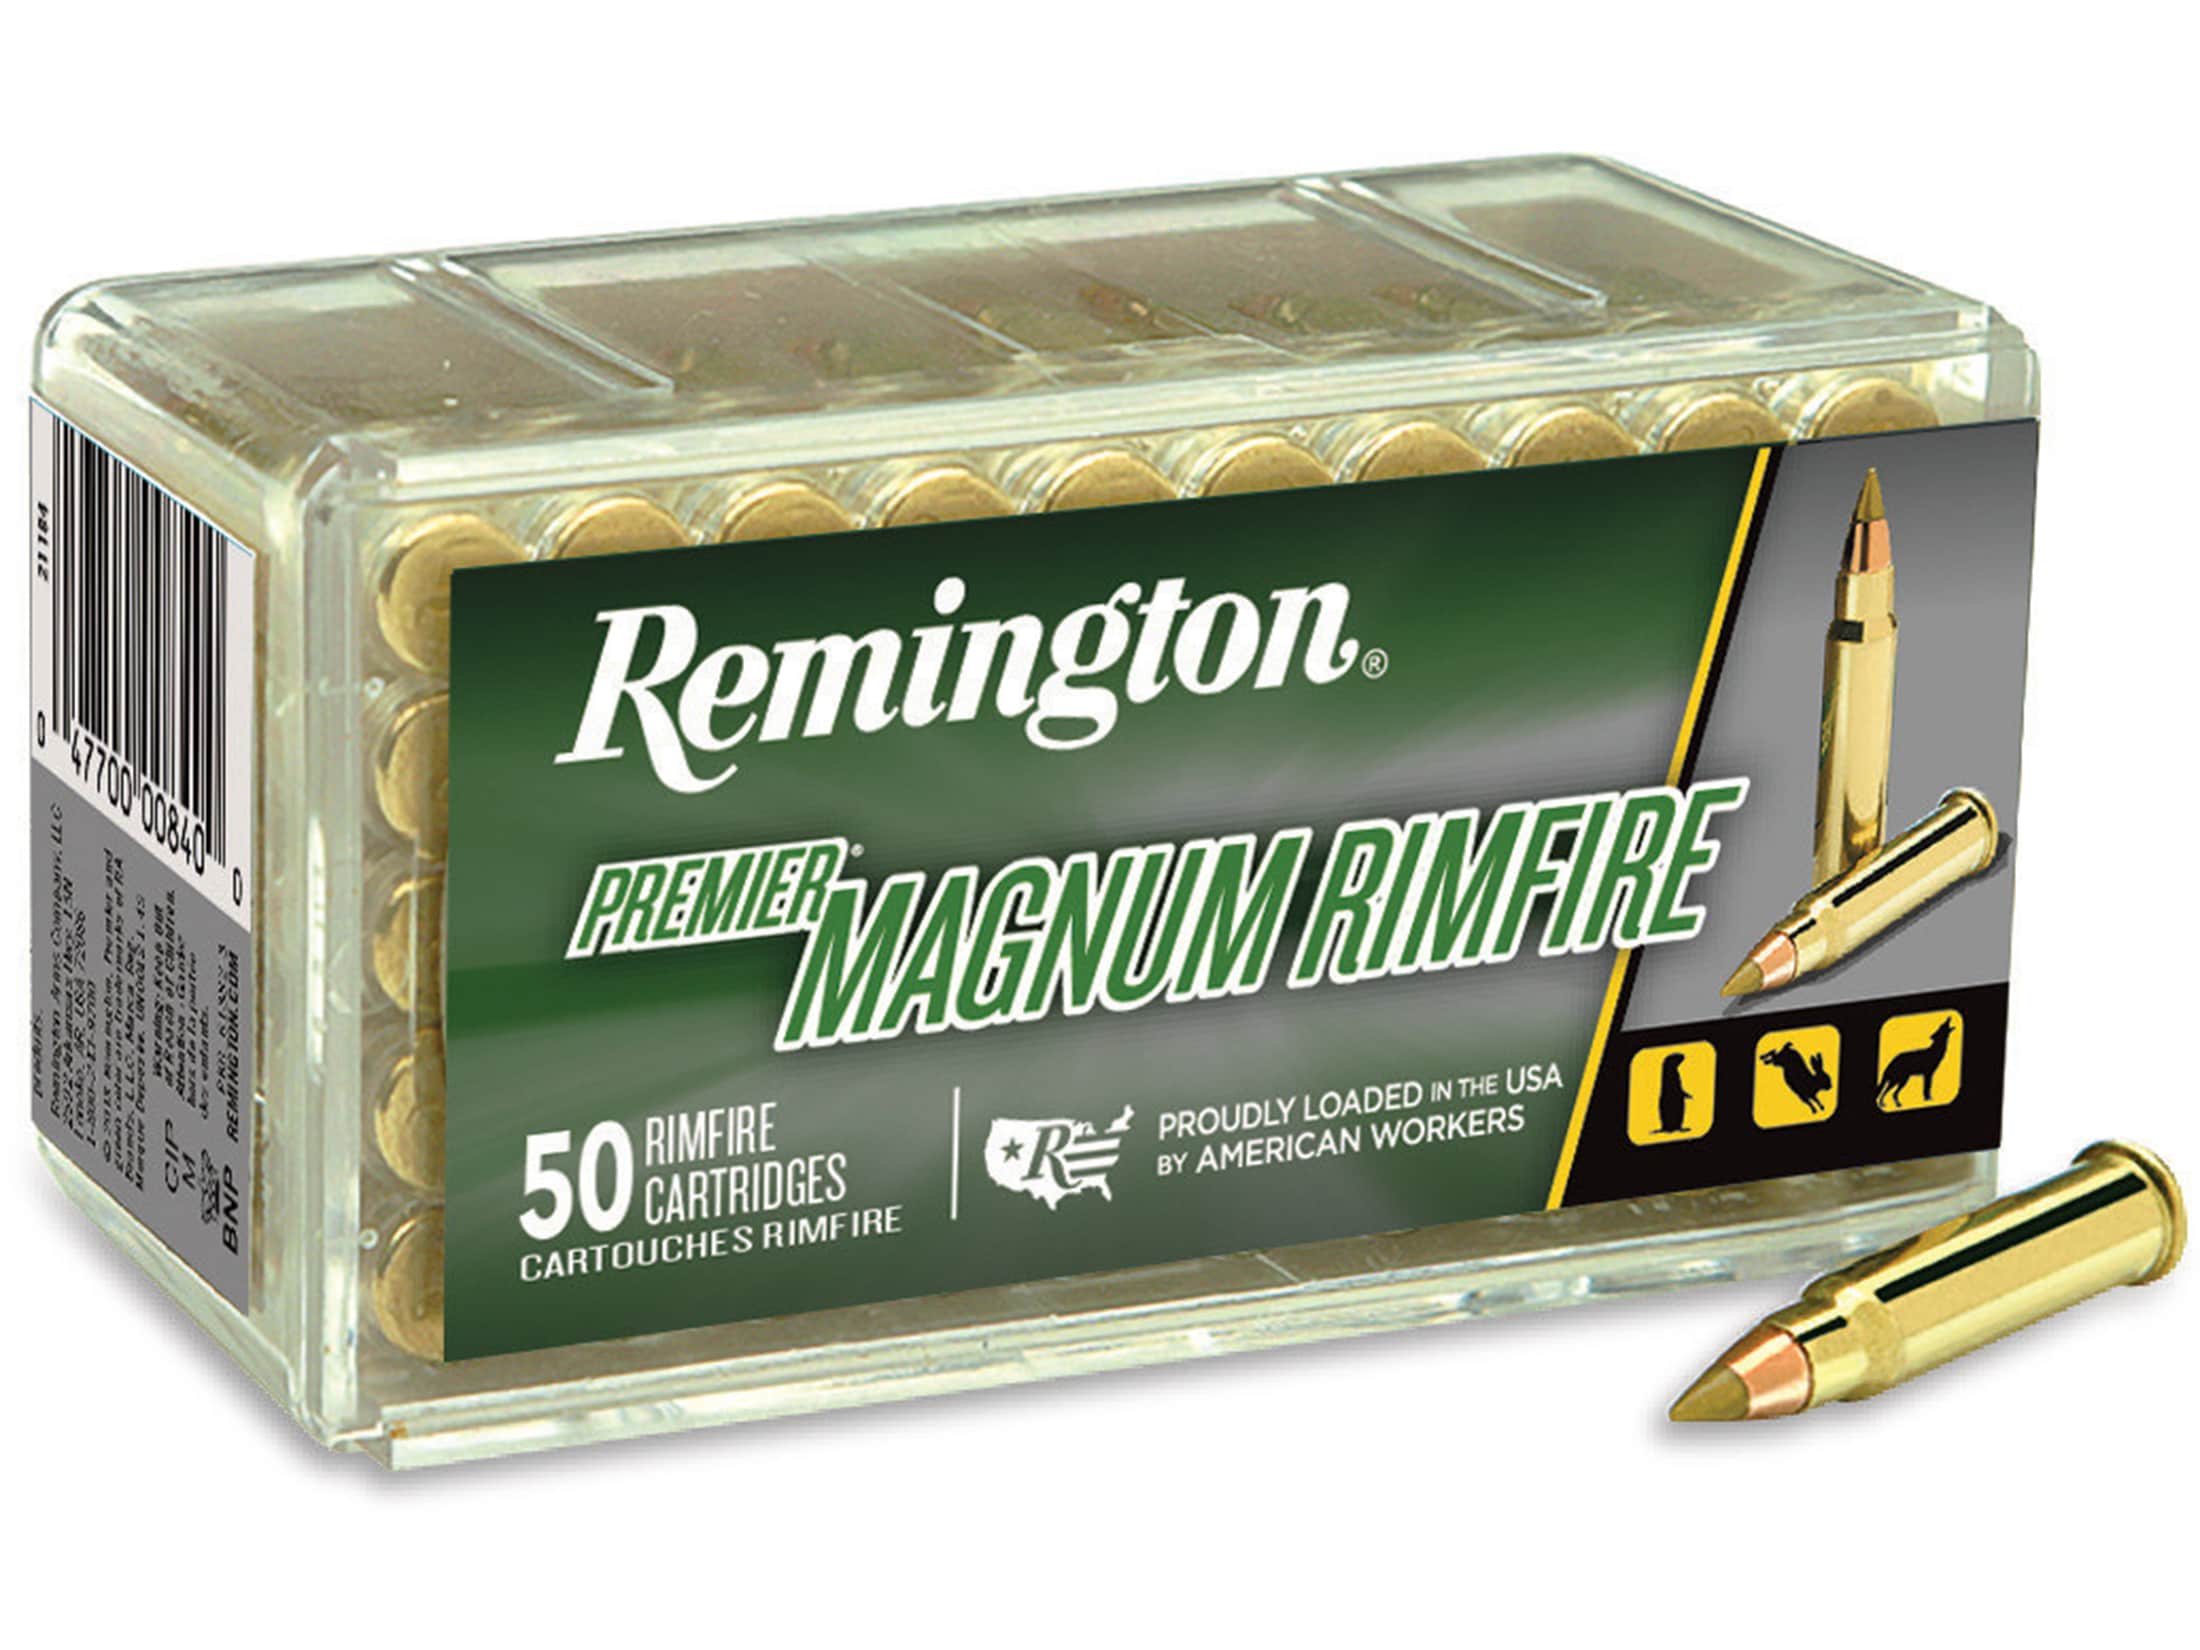 Remington Premier 17 HMR Ammunition is offered with an explosive 17 grain A...